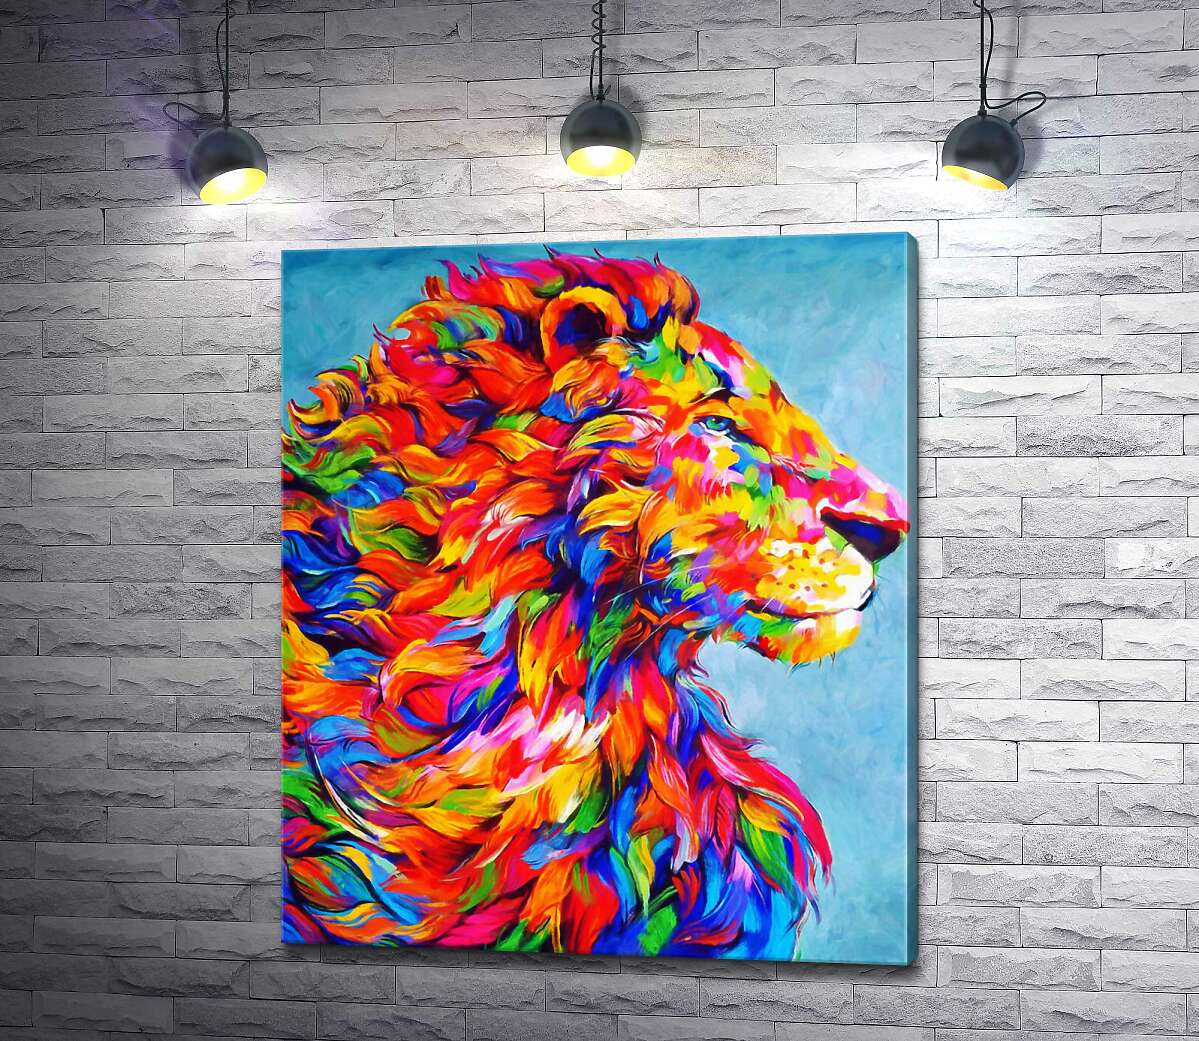 картина Радужная грива мощного профиля льва